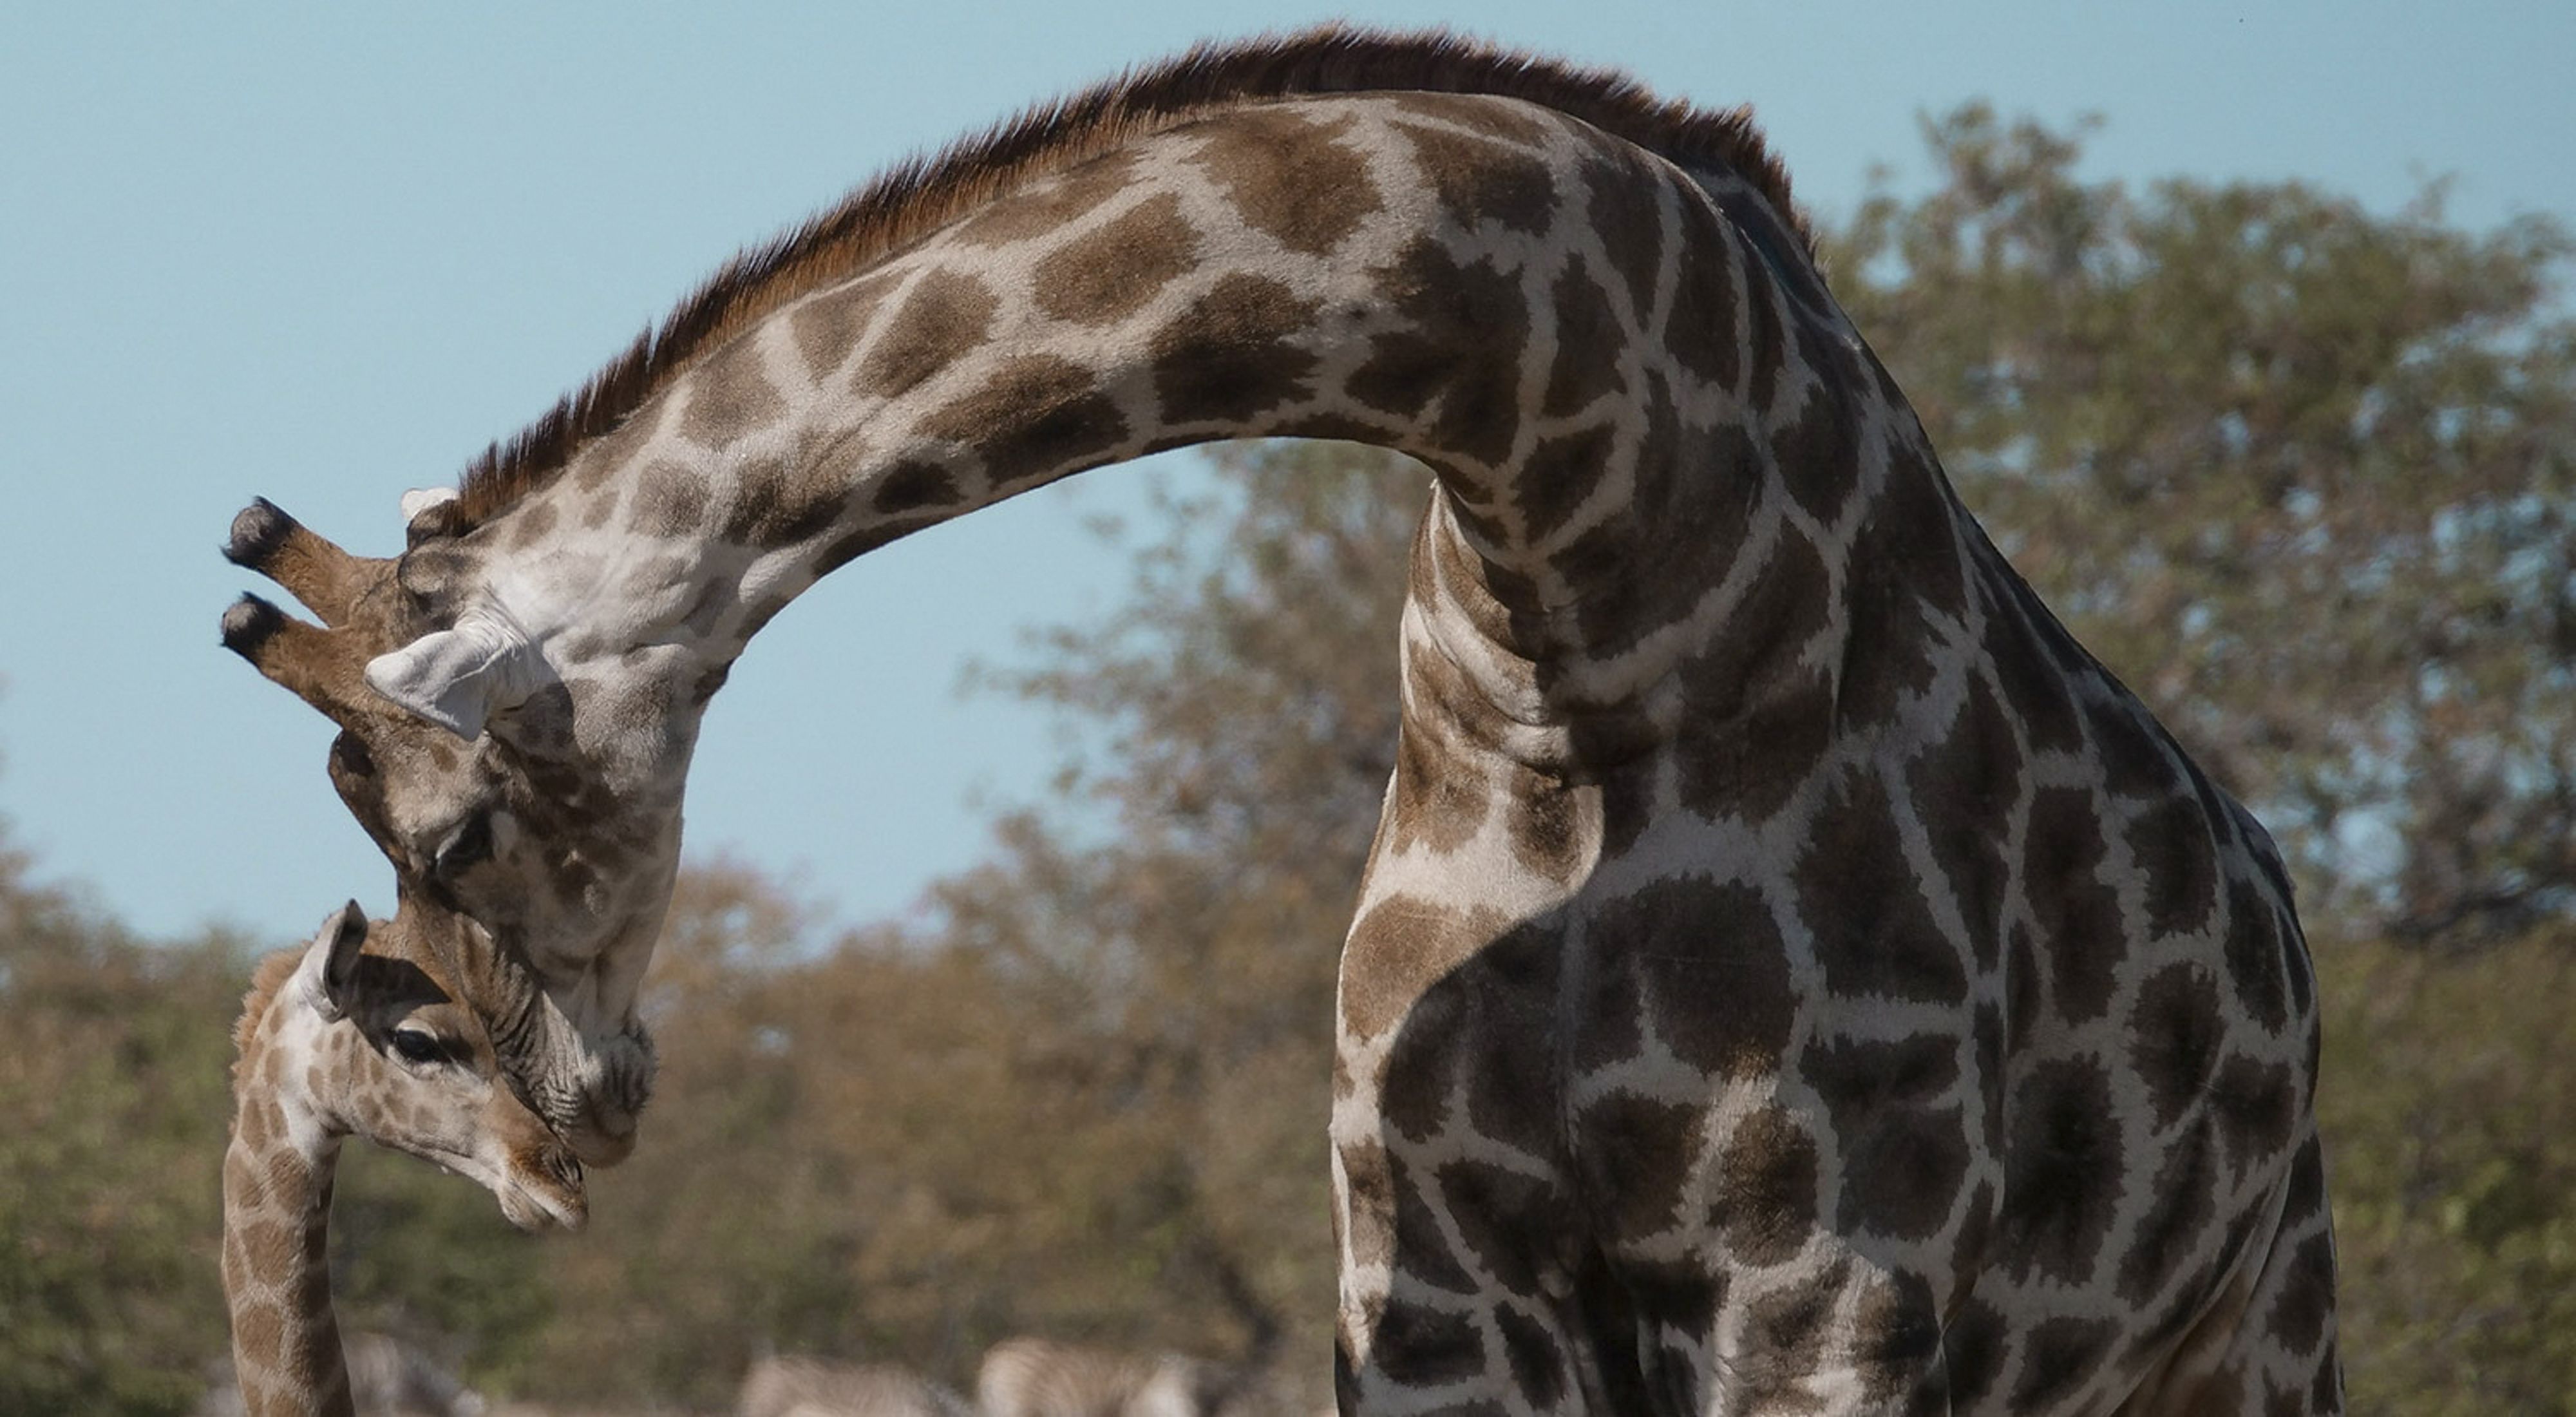 A mother giraffe nuzzles a baby giraffe in Etosha Park, in Namibia in June 2018.